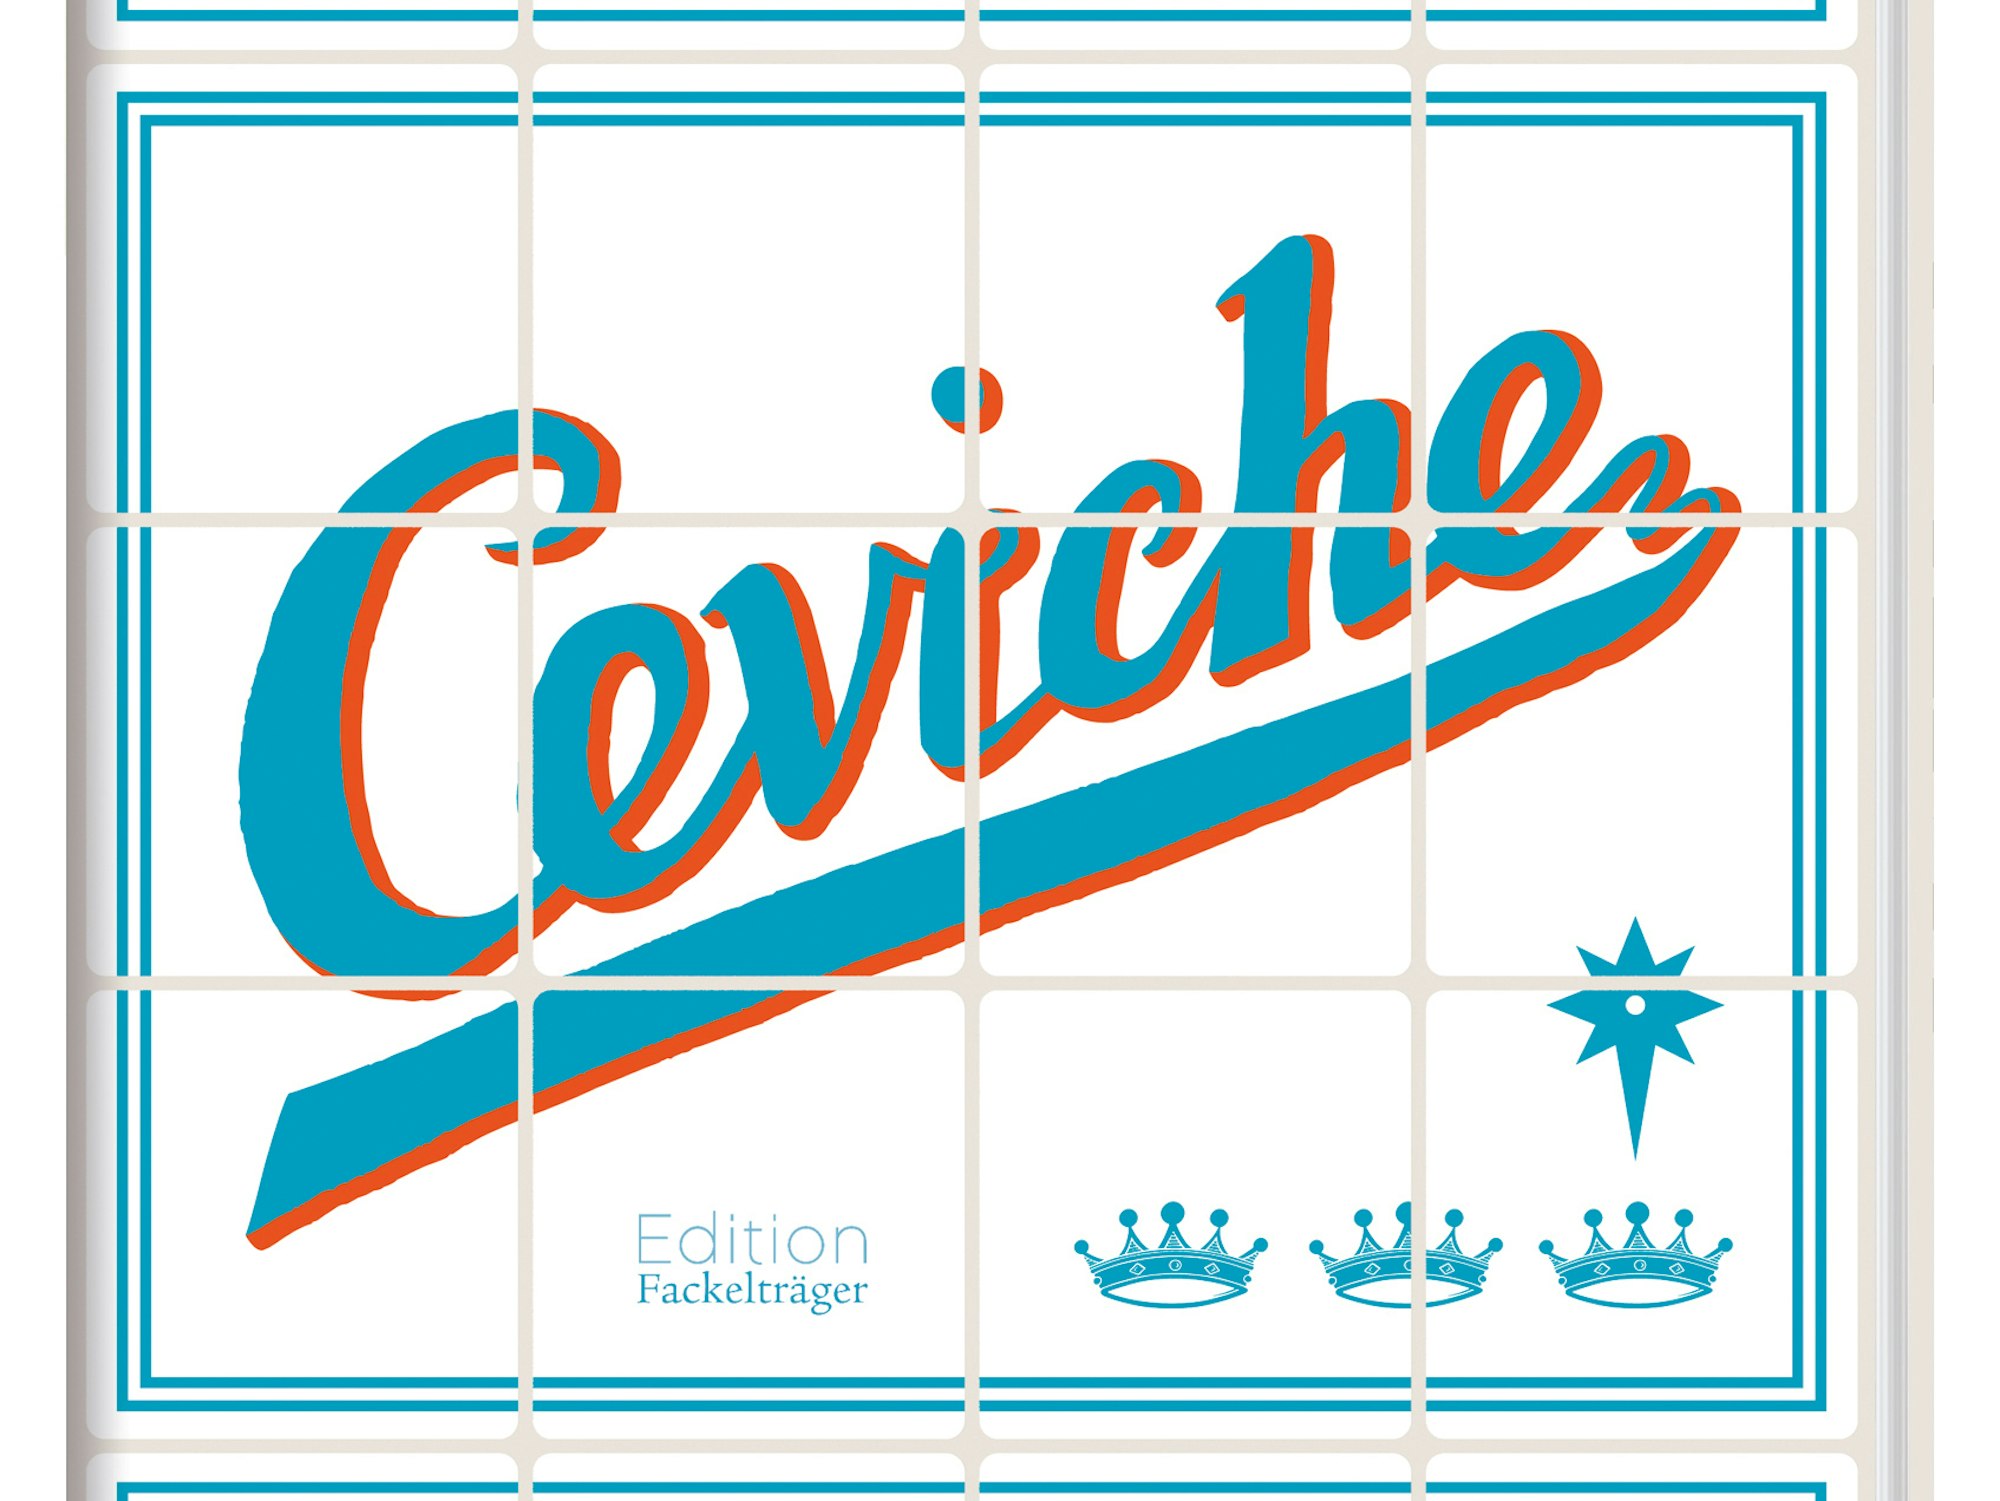 Ceviche Buch